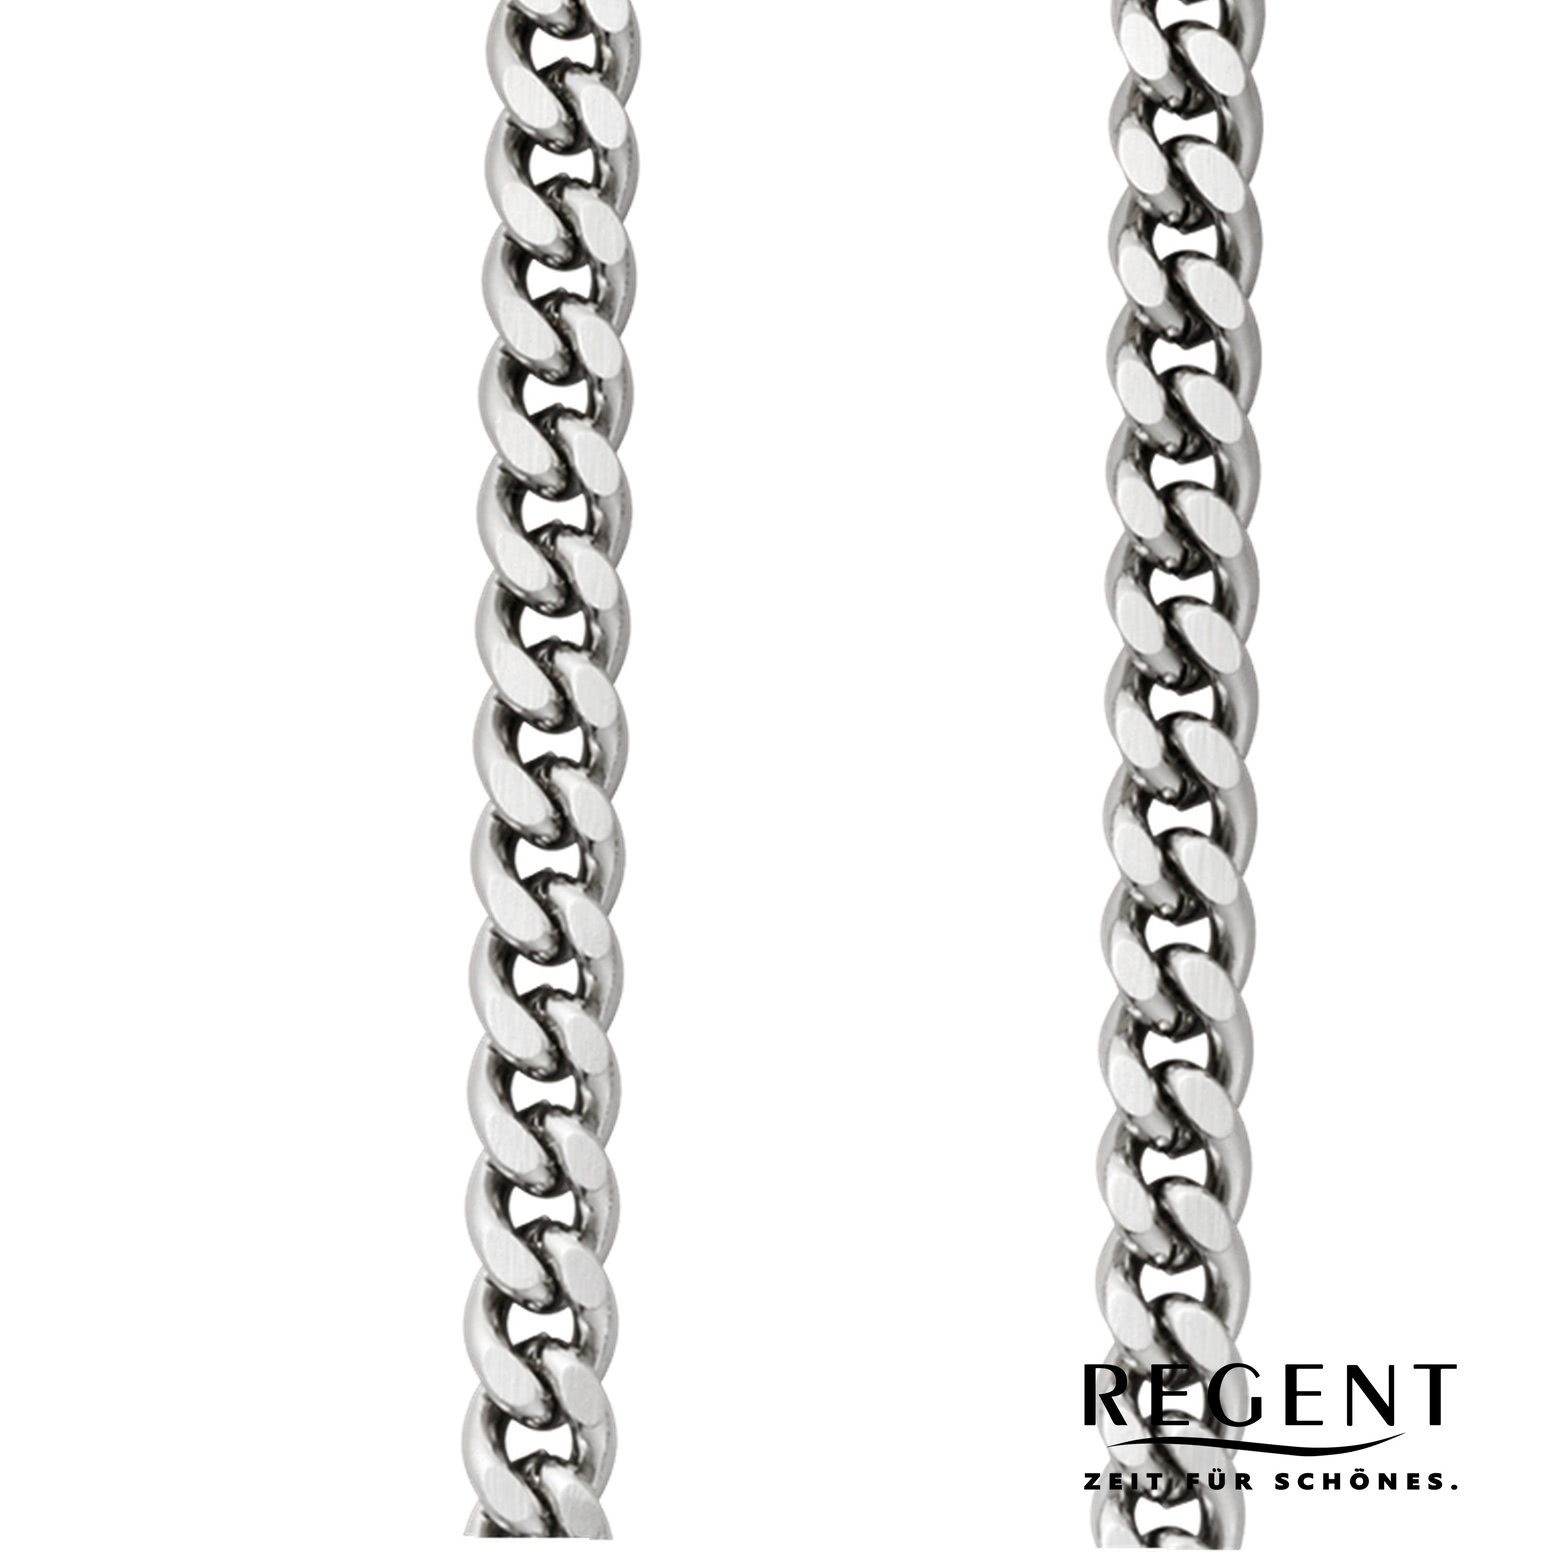 Taschenuhren-Kette 5mm P-45, Elegant Herren Regent Regent Taschenuhrenkette, Kettenuhr